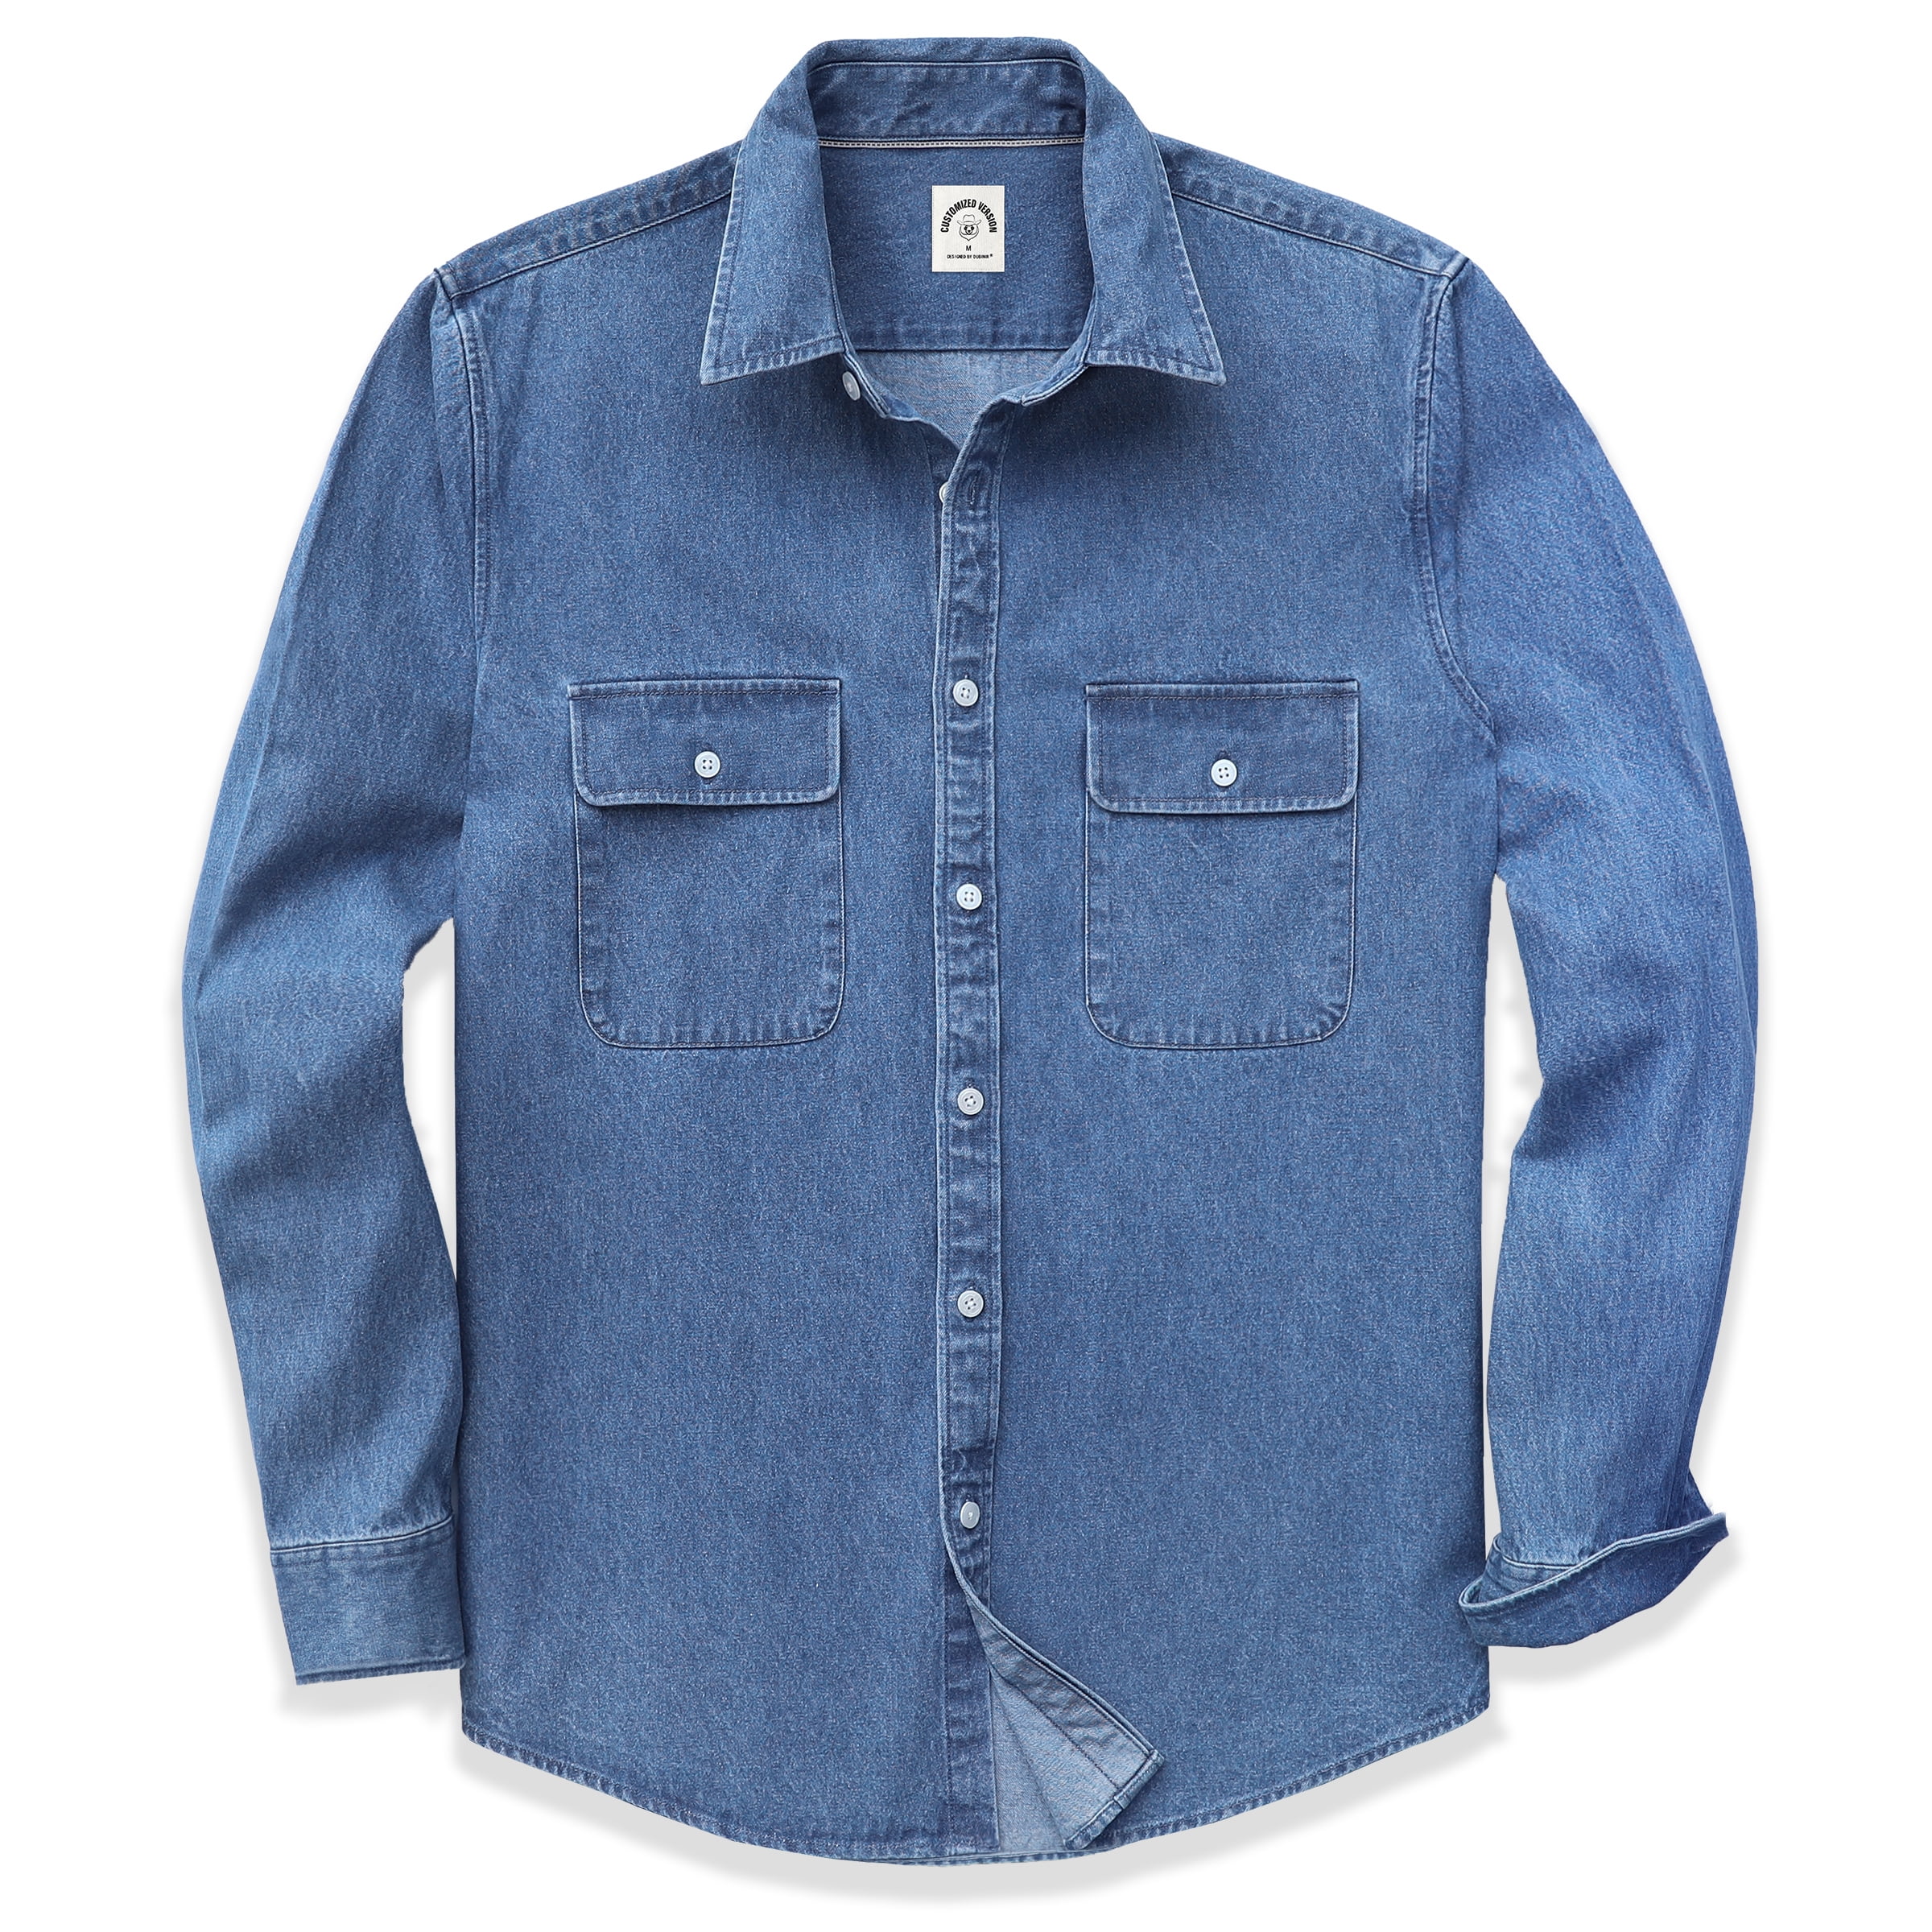 Carhartt WIP – Weldon Denim Shirt Stonewashed Blue | Highsnobiety Shop